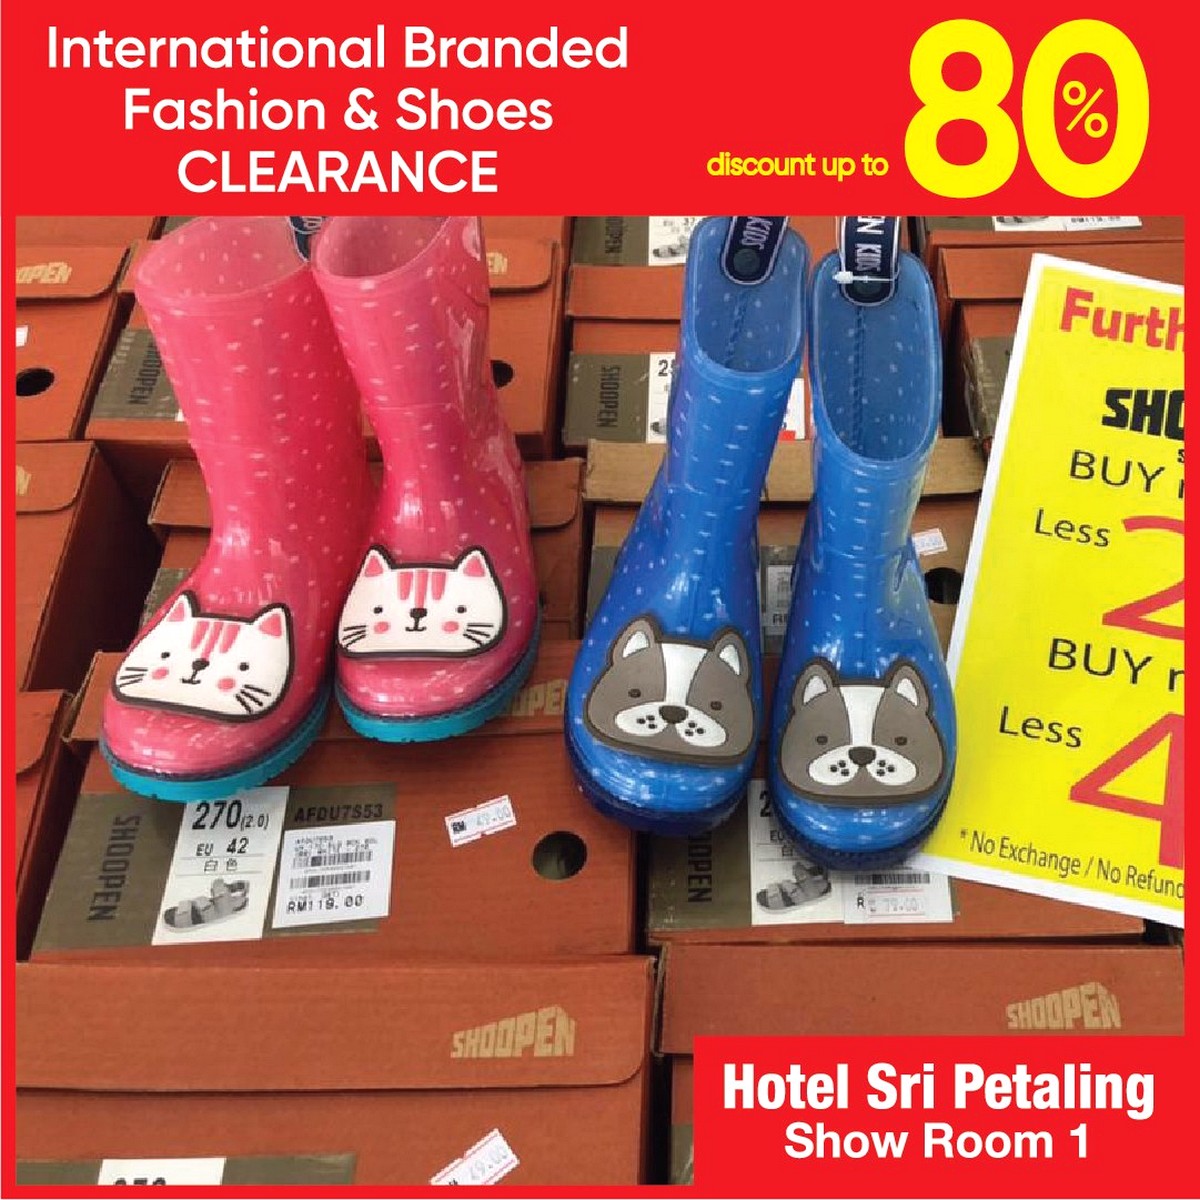 Hotel-Sri-Petaling-Warehouse-Sale-2021-13 - Apparels Fashion Accessories Fashion Lifestyle & Department Store Kuala Lumpur Selangor Warehouse Sale & Clearance in Malaysia 